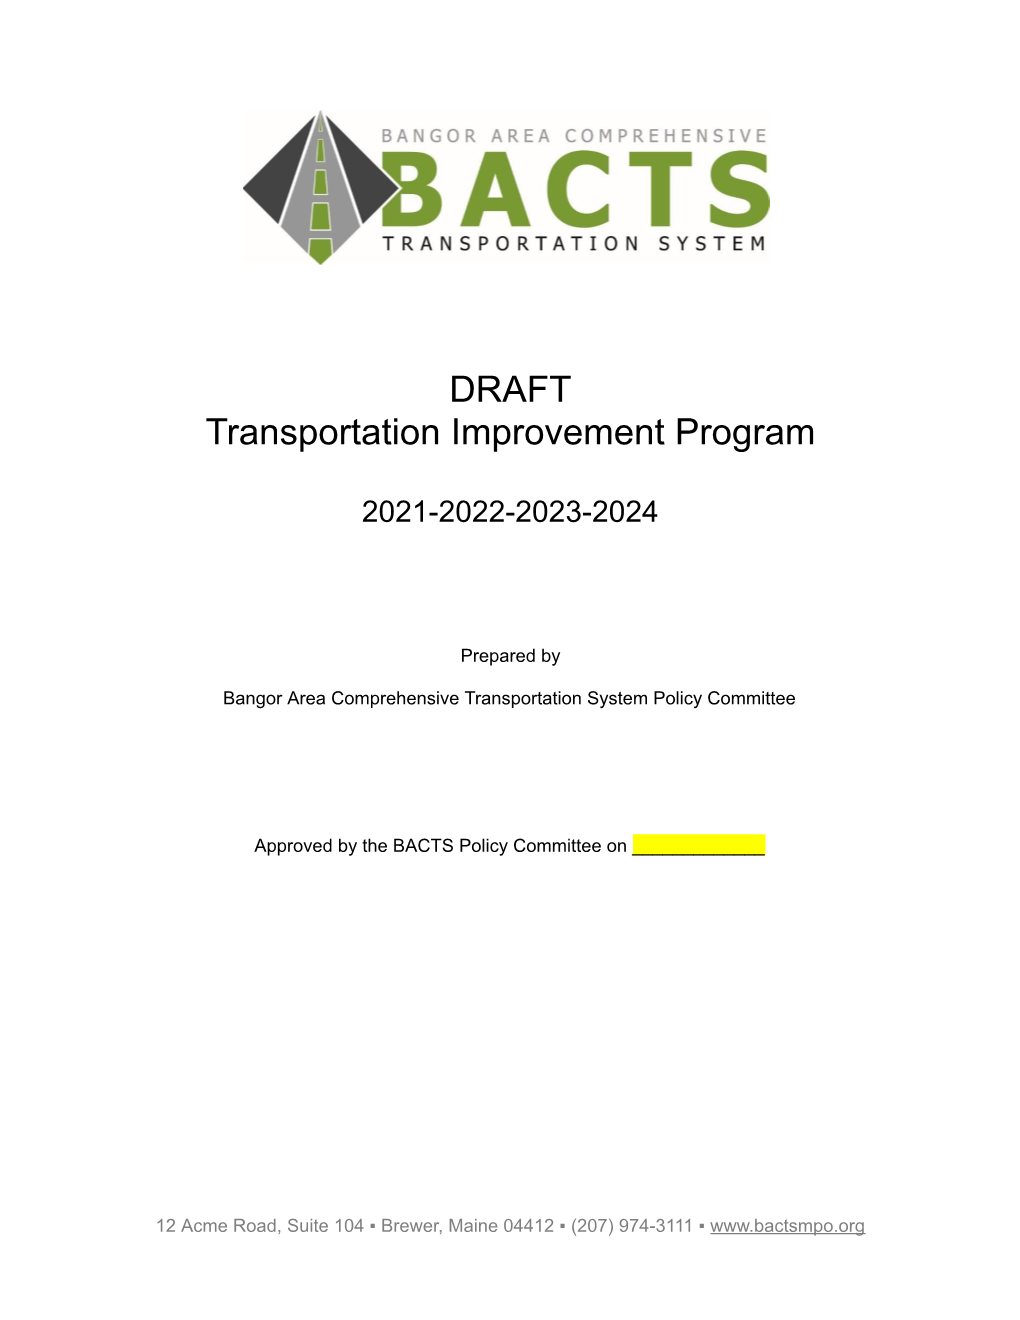 DRAFT Transportation Improvement Program